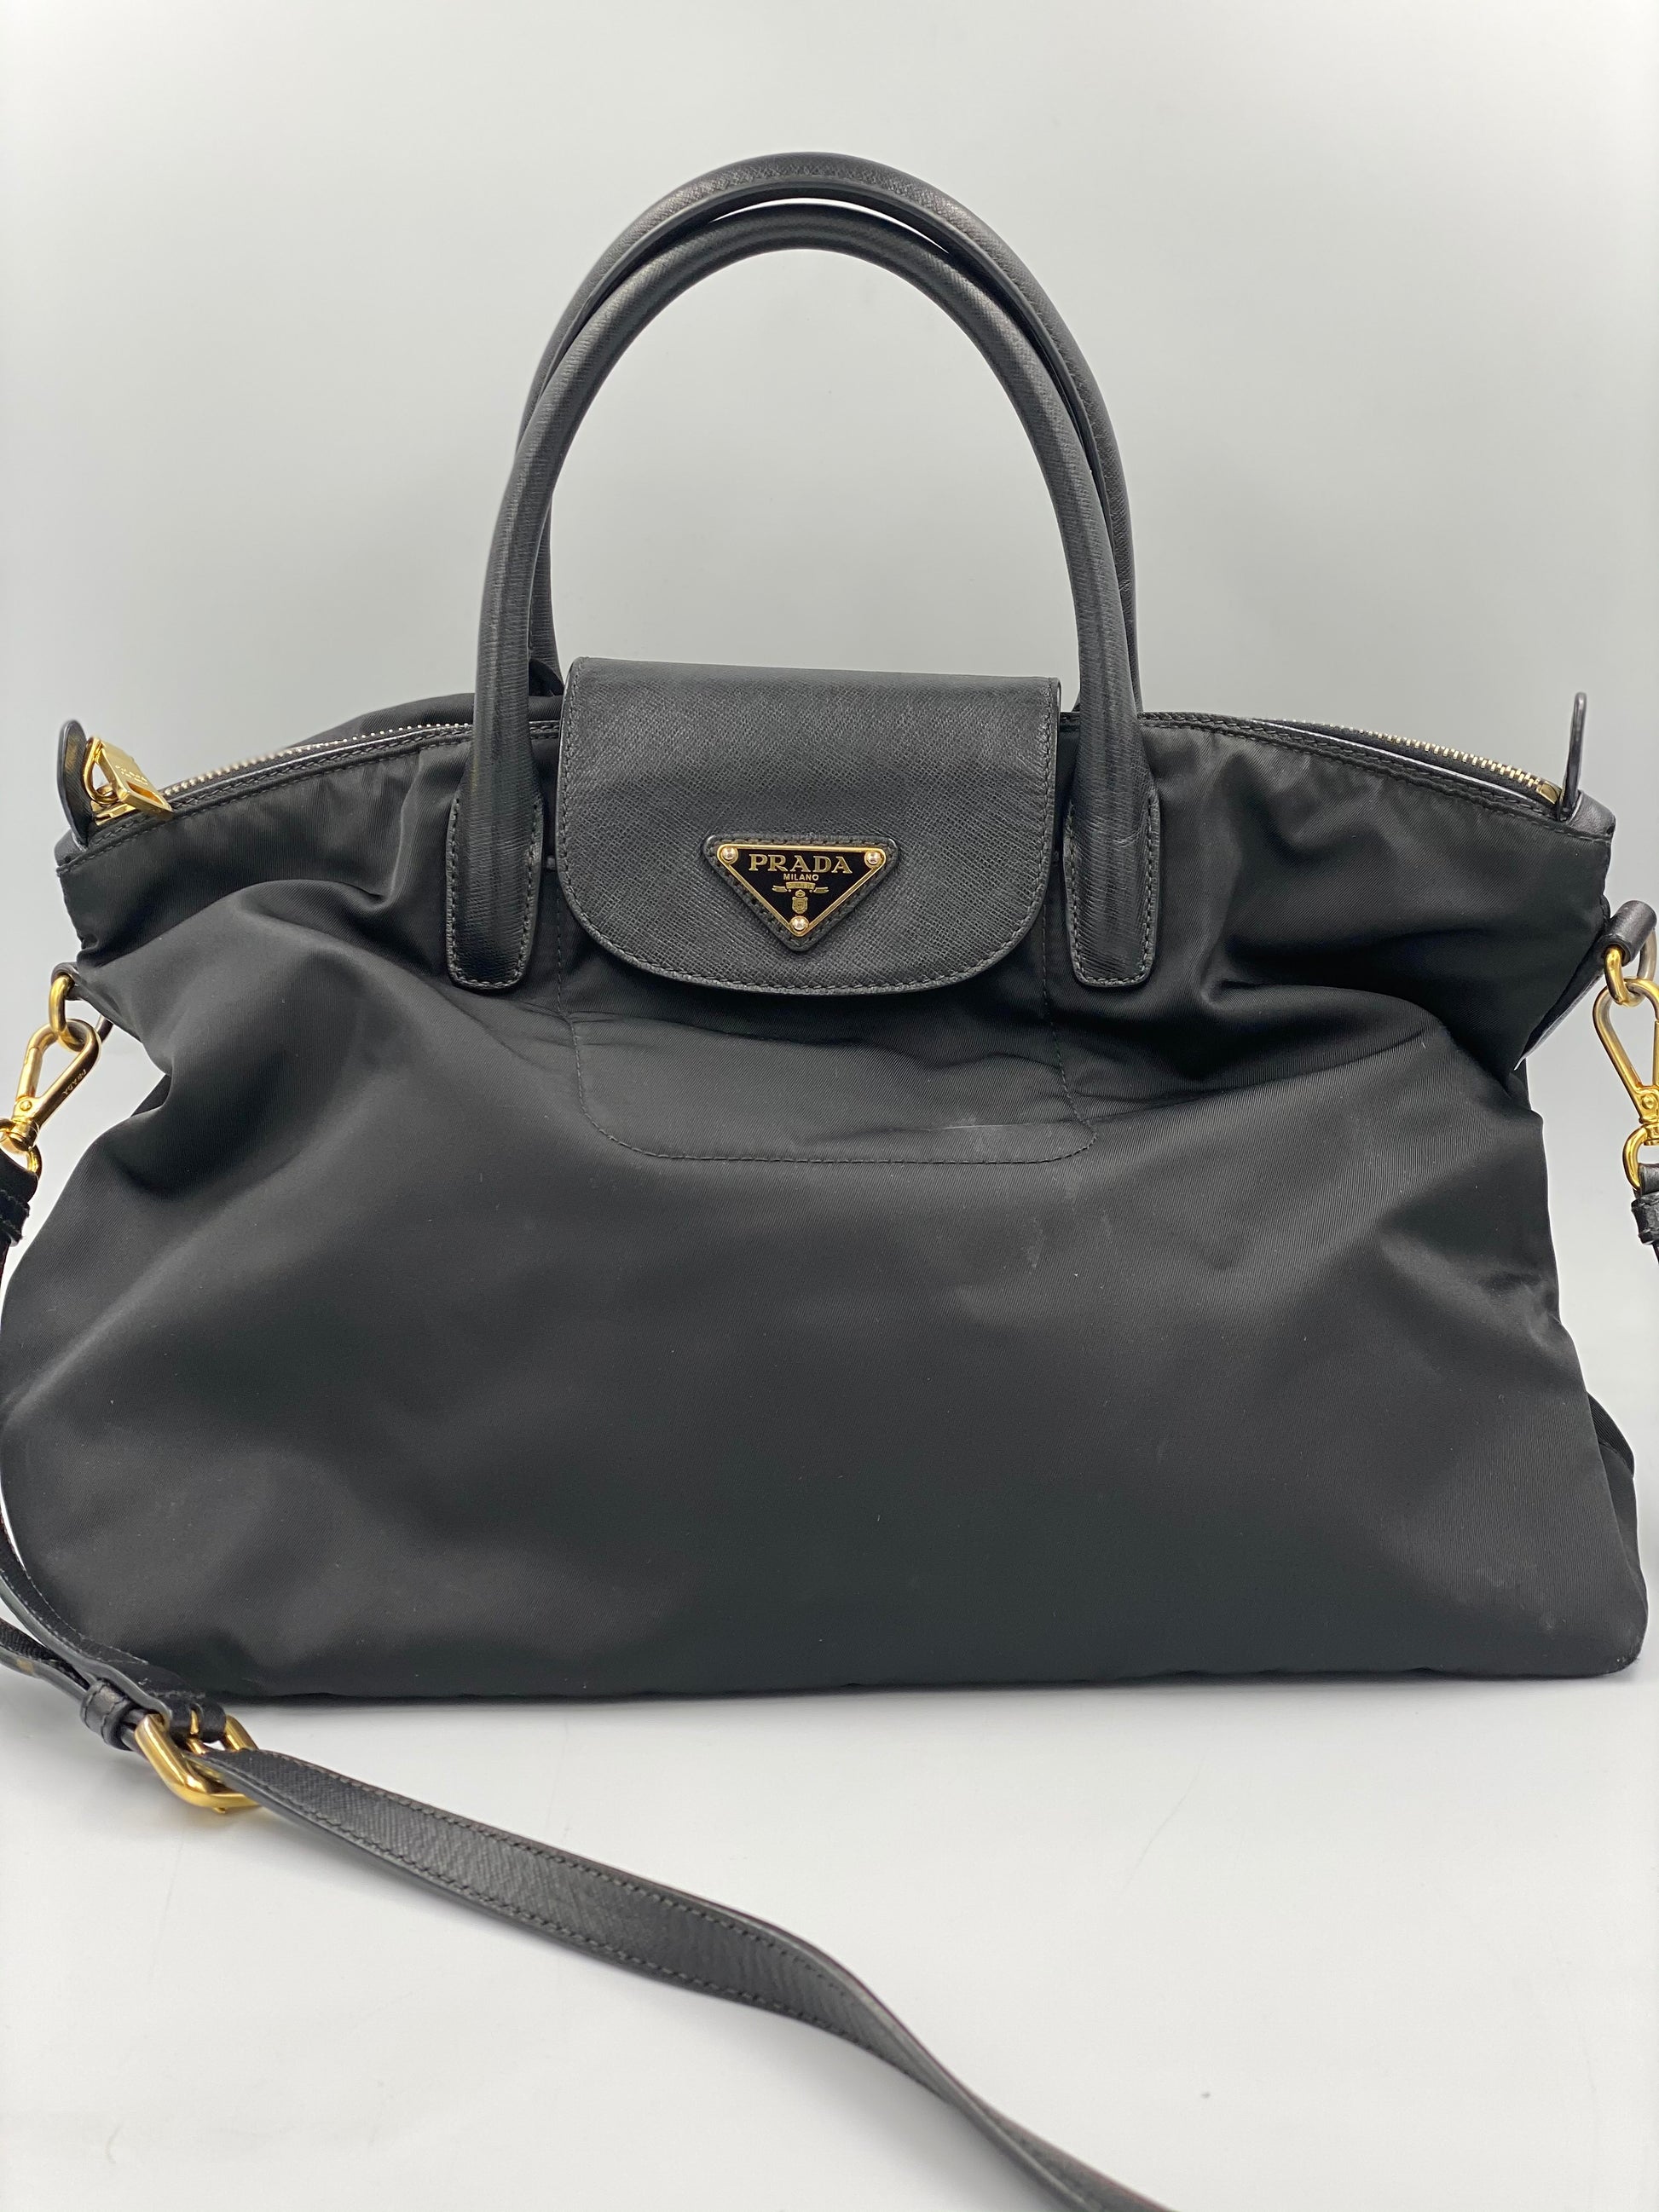 Cartera Prada Nylon Bag – The New Black